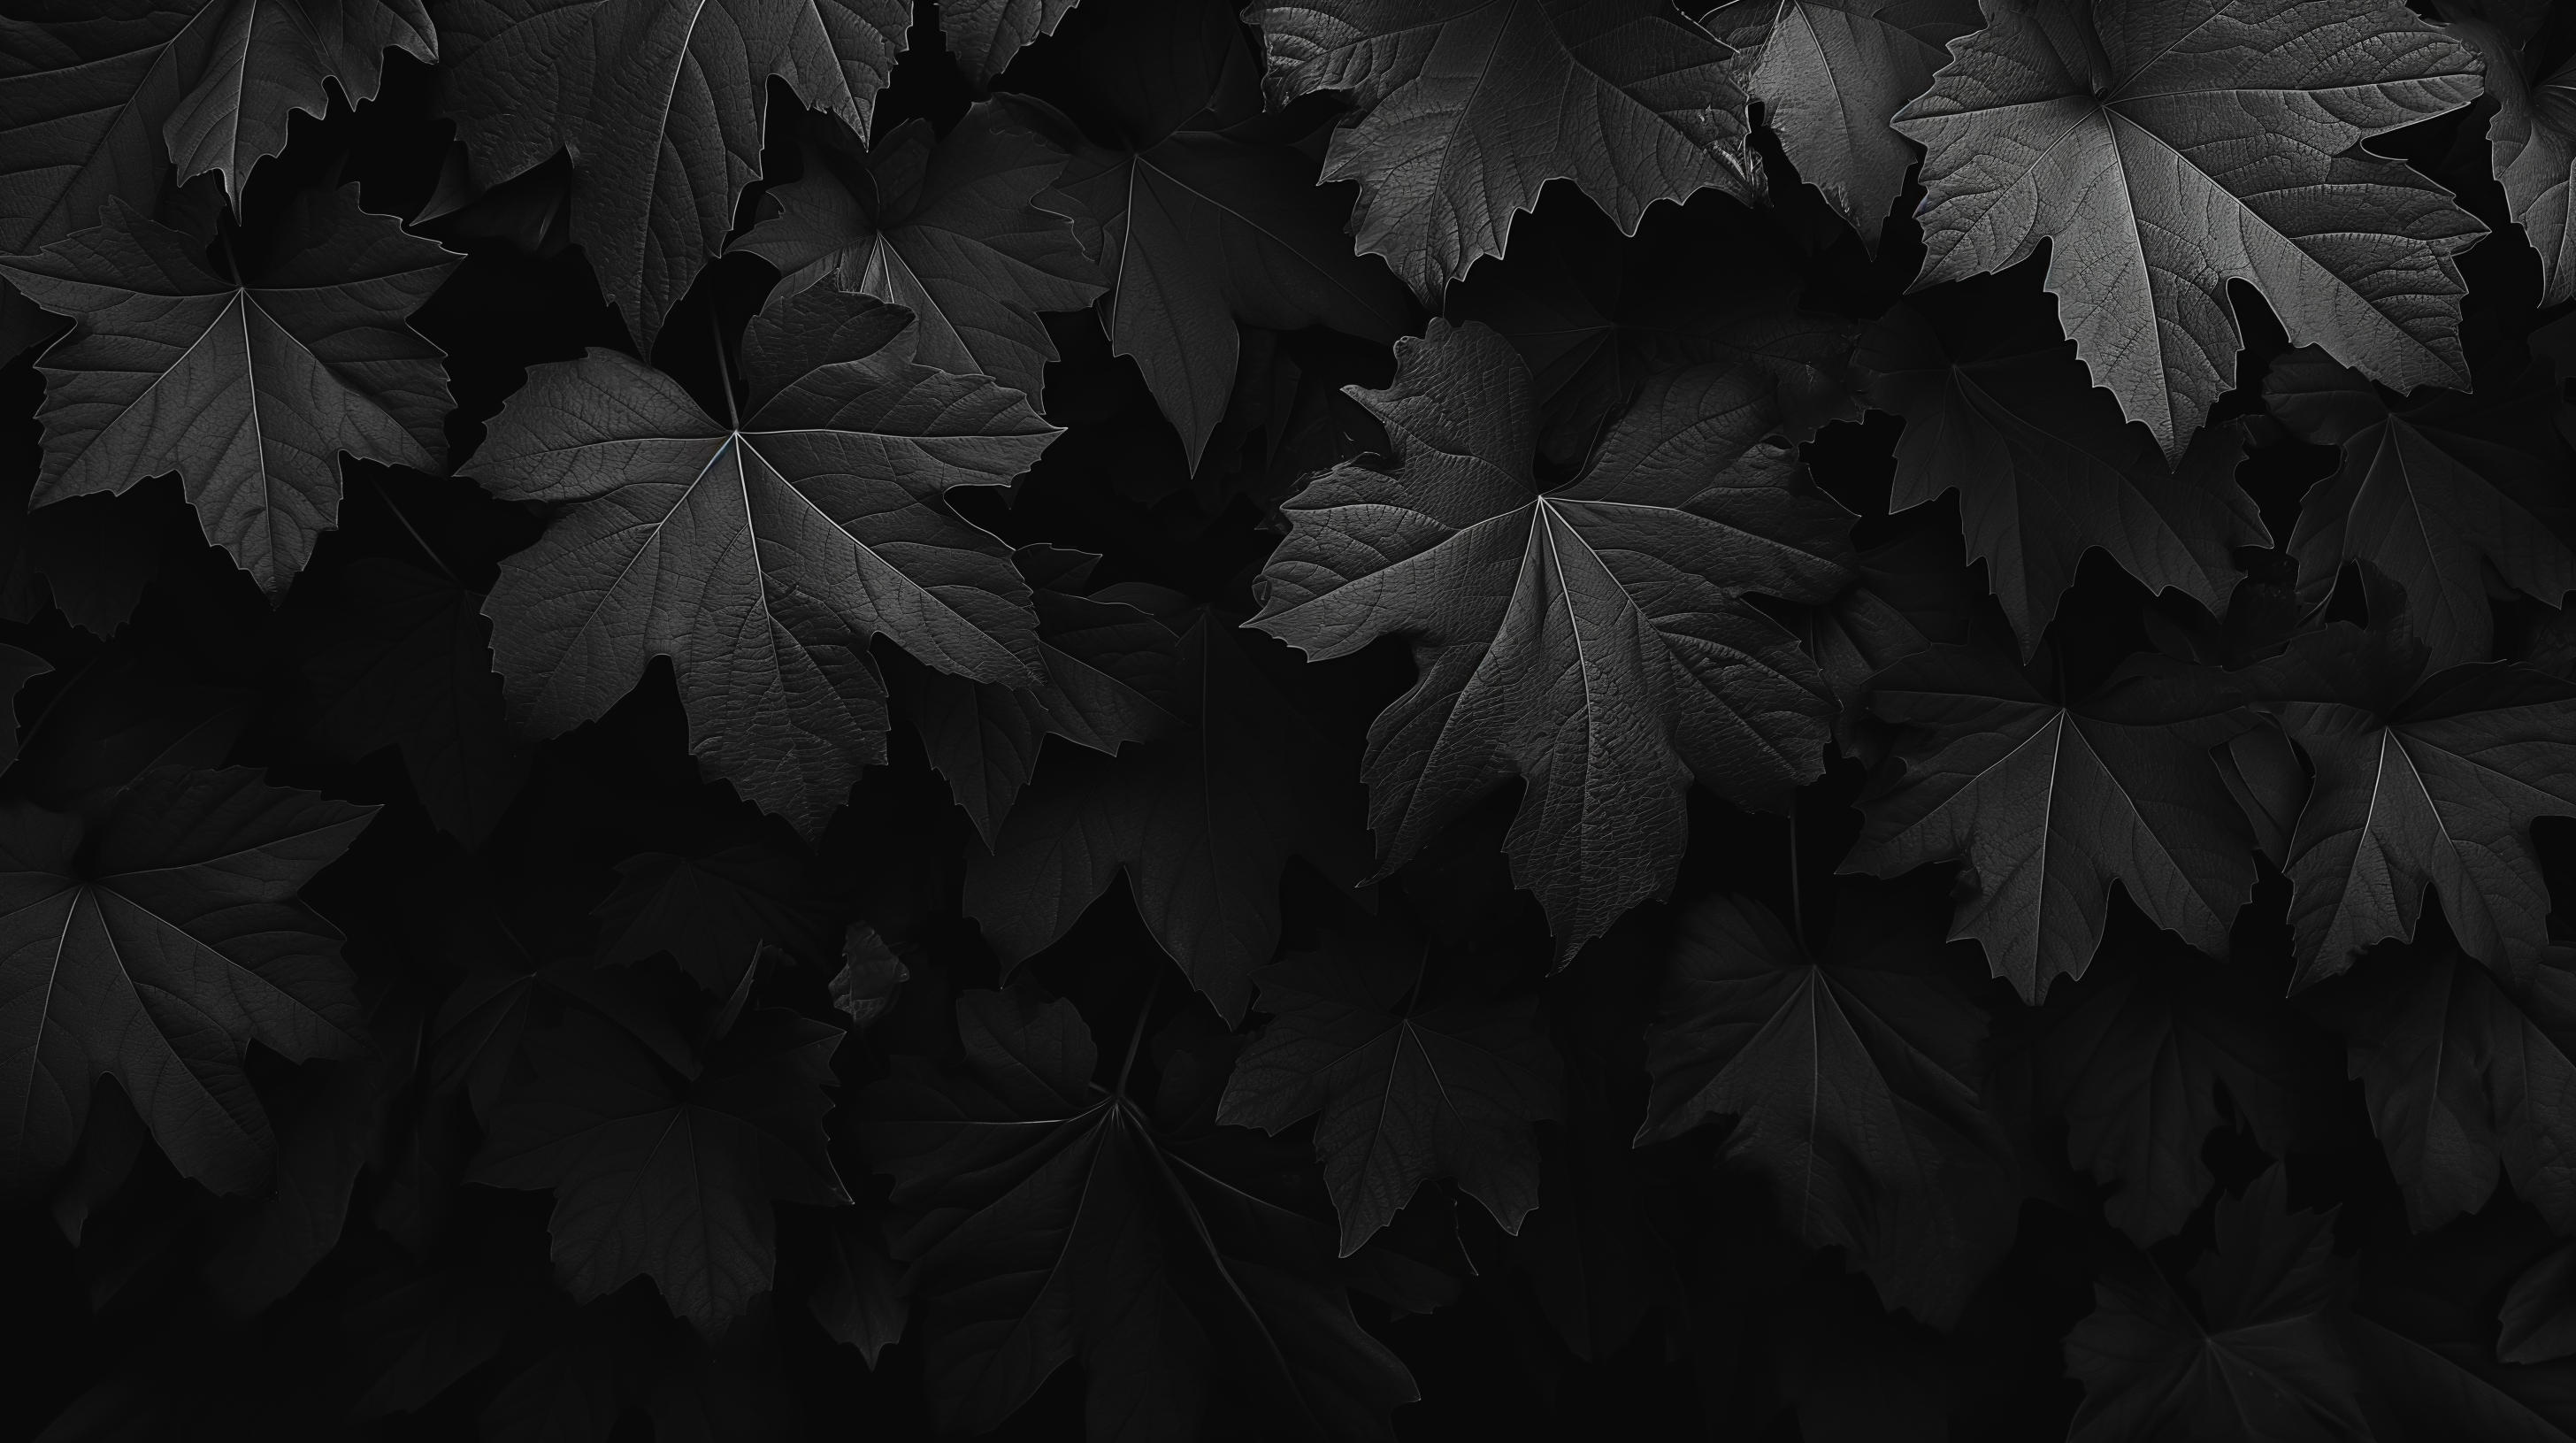 Dark Aesthetic Leaves HD Wallpaper By Robokoboto